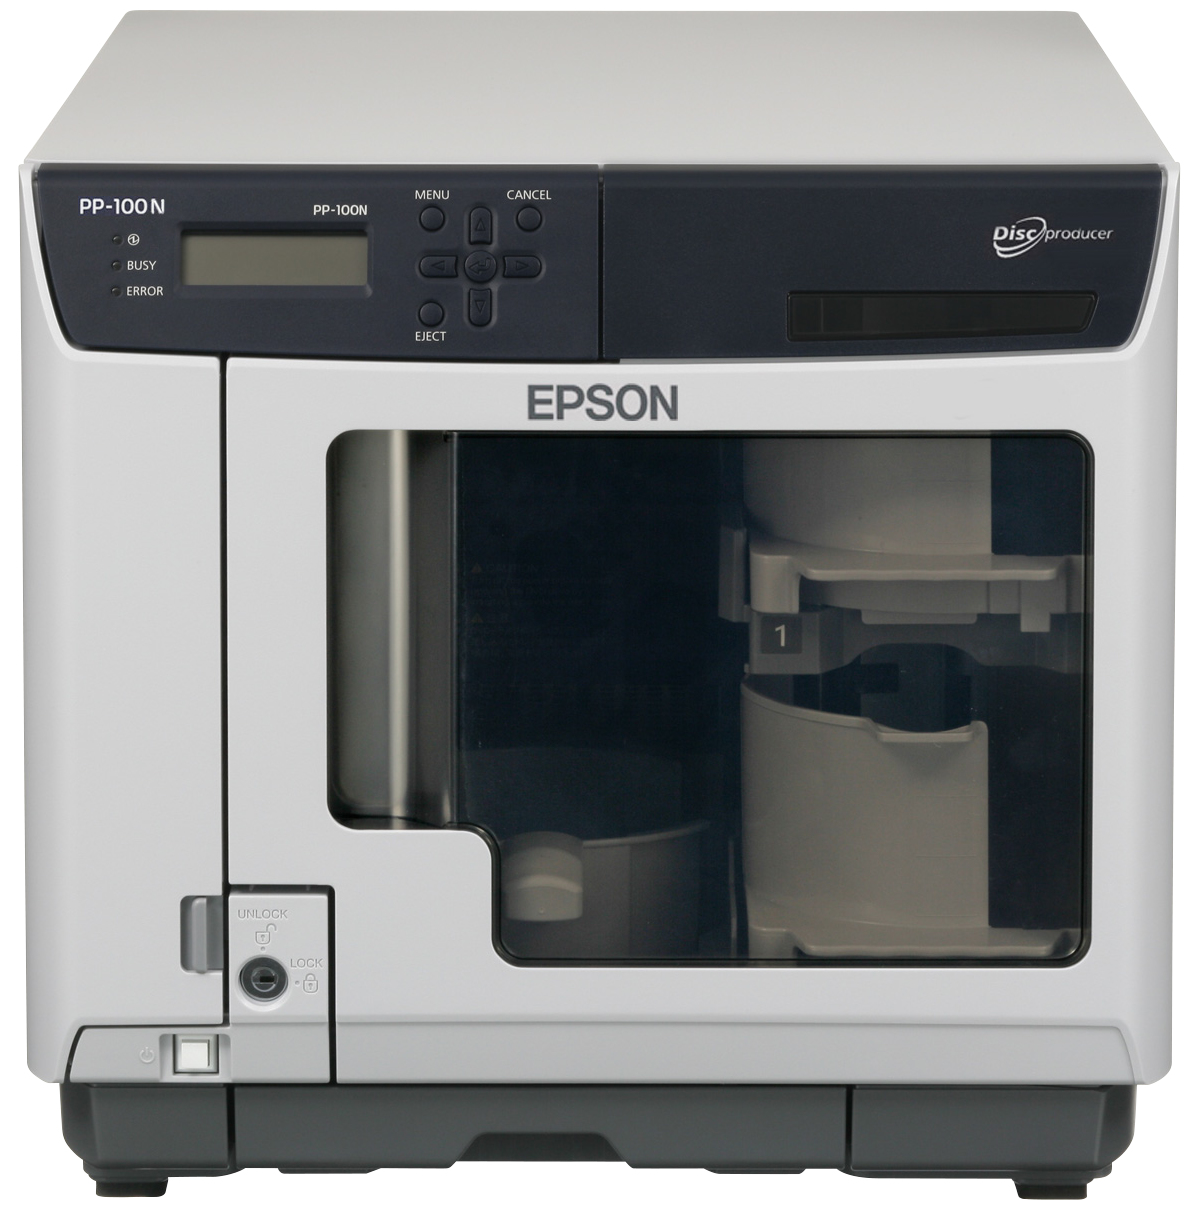 EPSON DISCPRODUCER PP-100N (SATA)